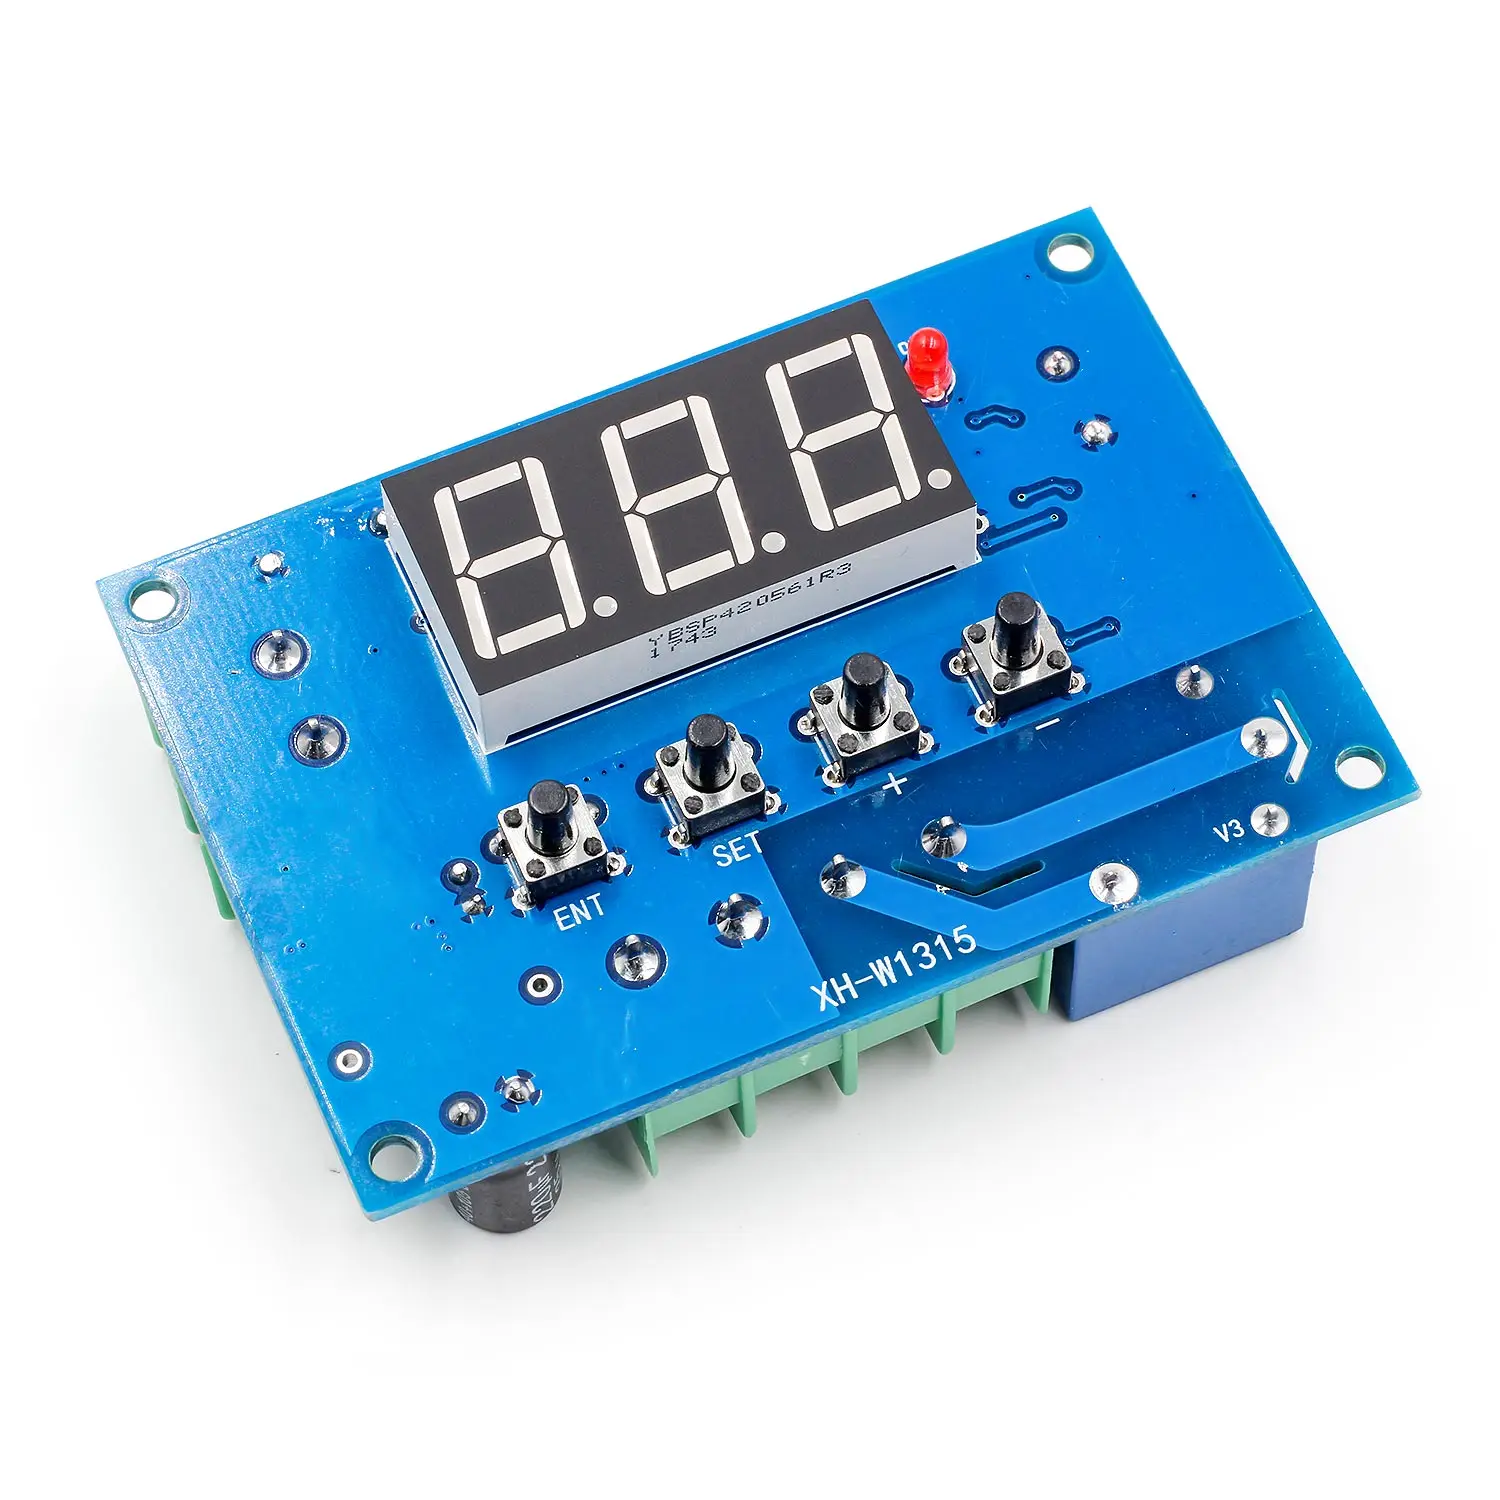 K Тип термопары XH-W1315 высокотемпературного типа температурный контроллер-30-999 градусов